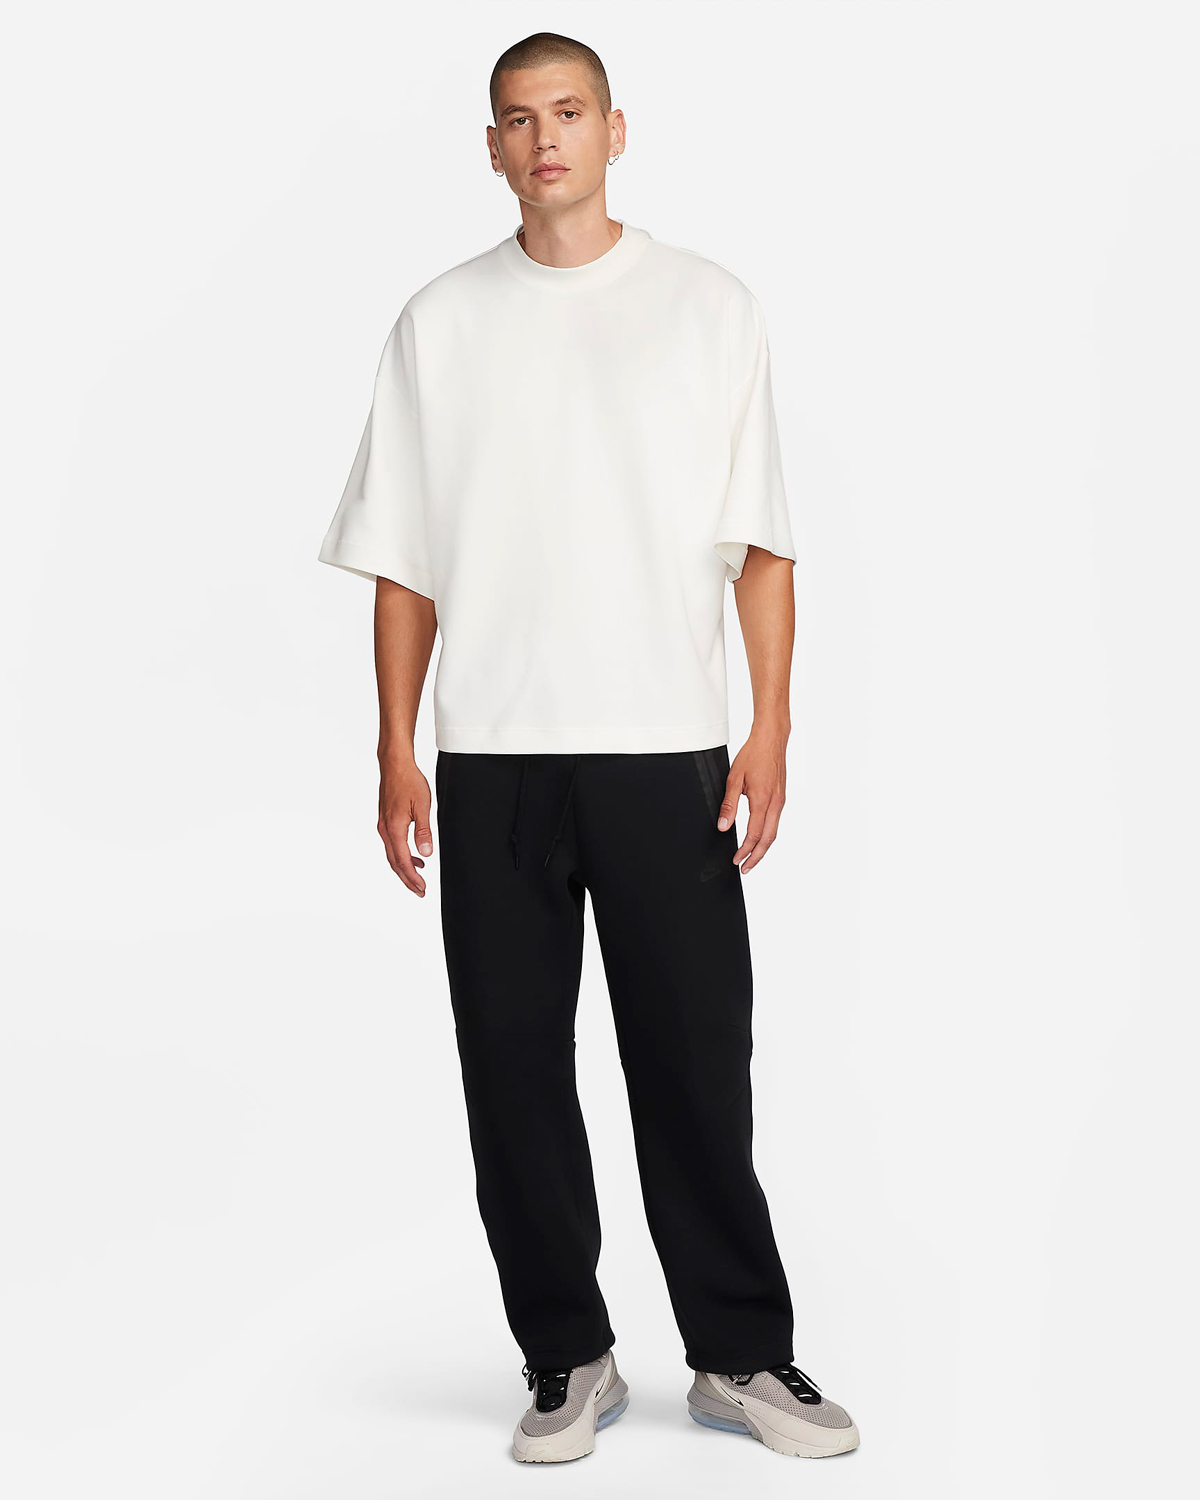 Nike-Tech-Fleece-Reimagined-Short-Sleeve-Sweatshirt-Sail